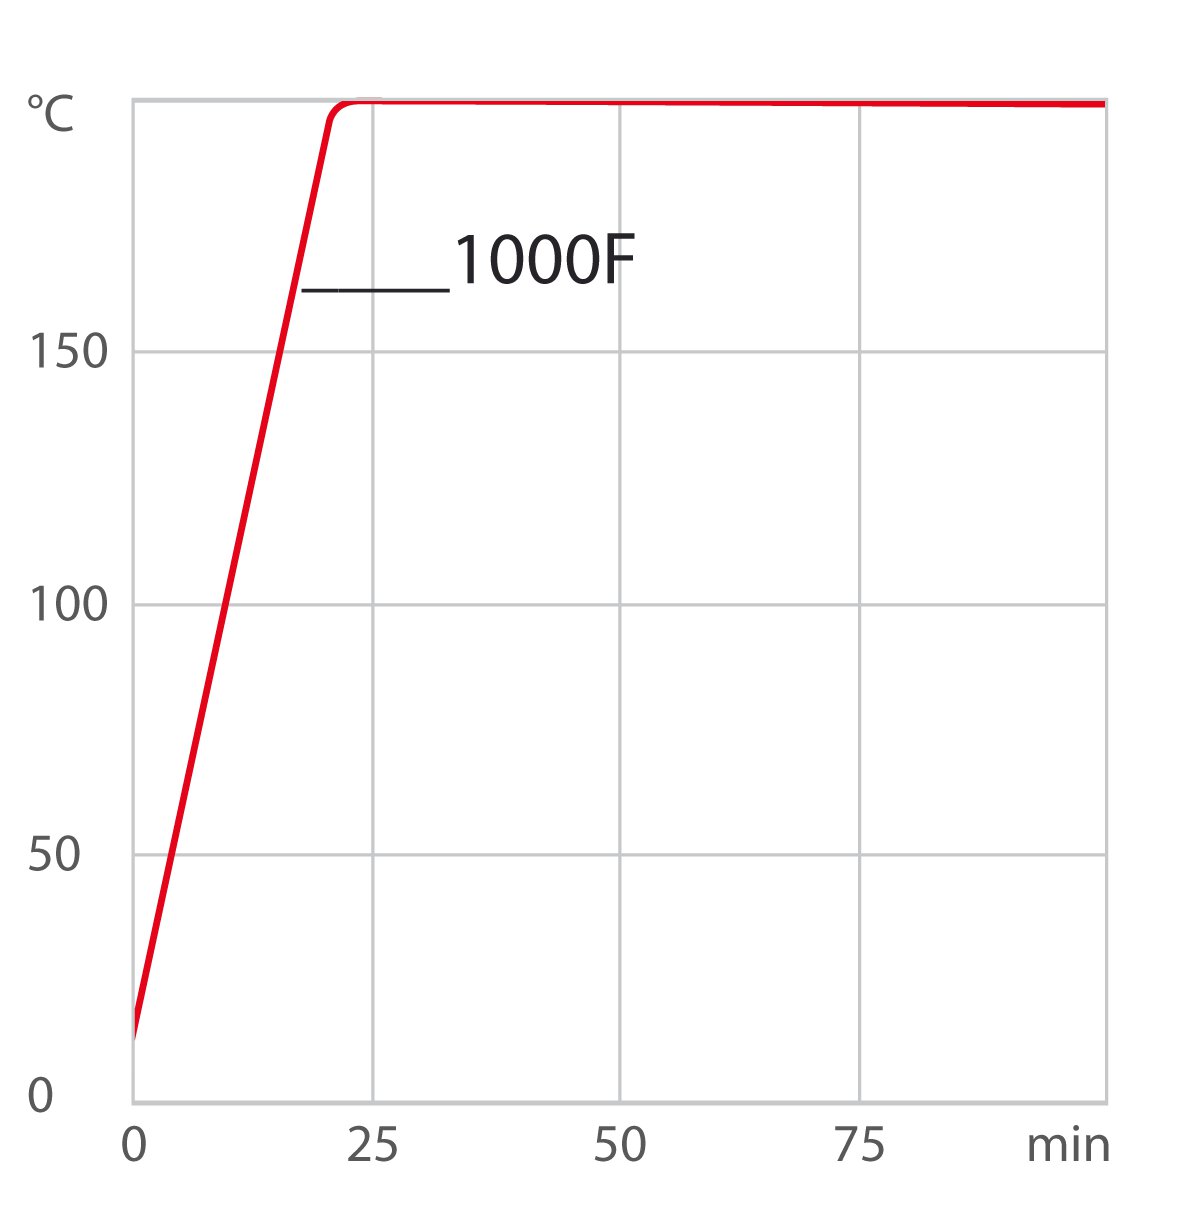 Heating curve refrigerated circulators 1000F